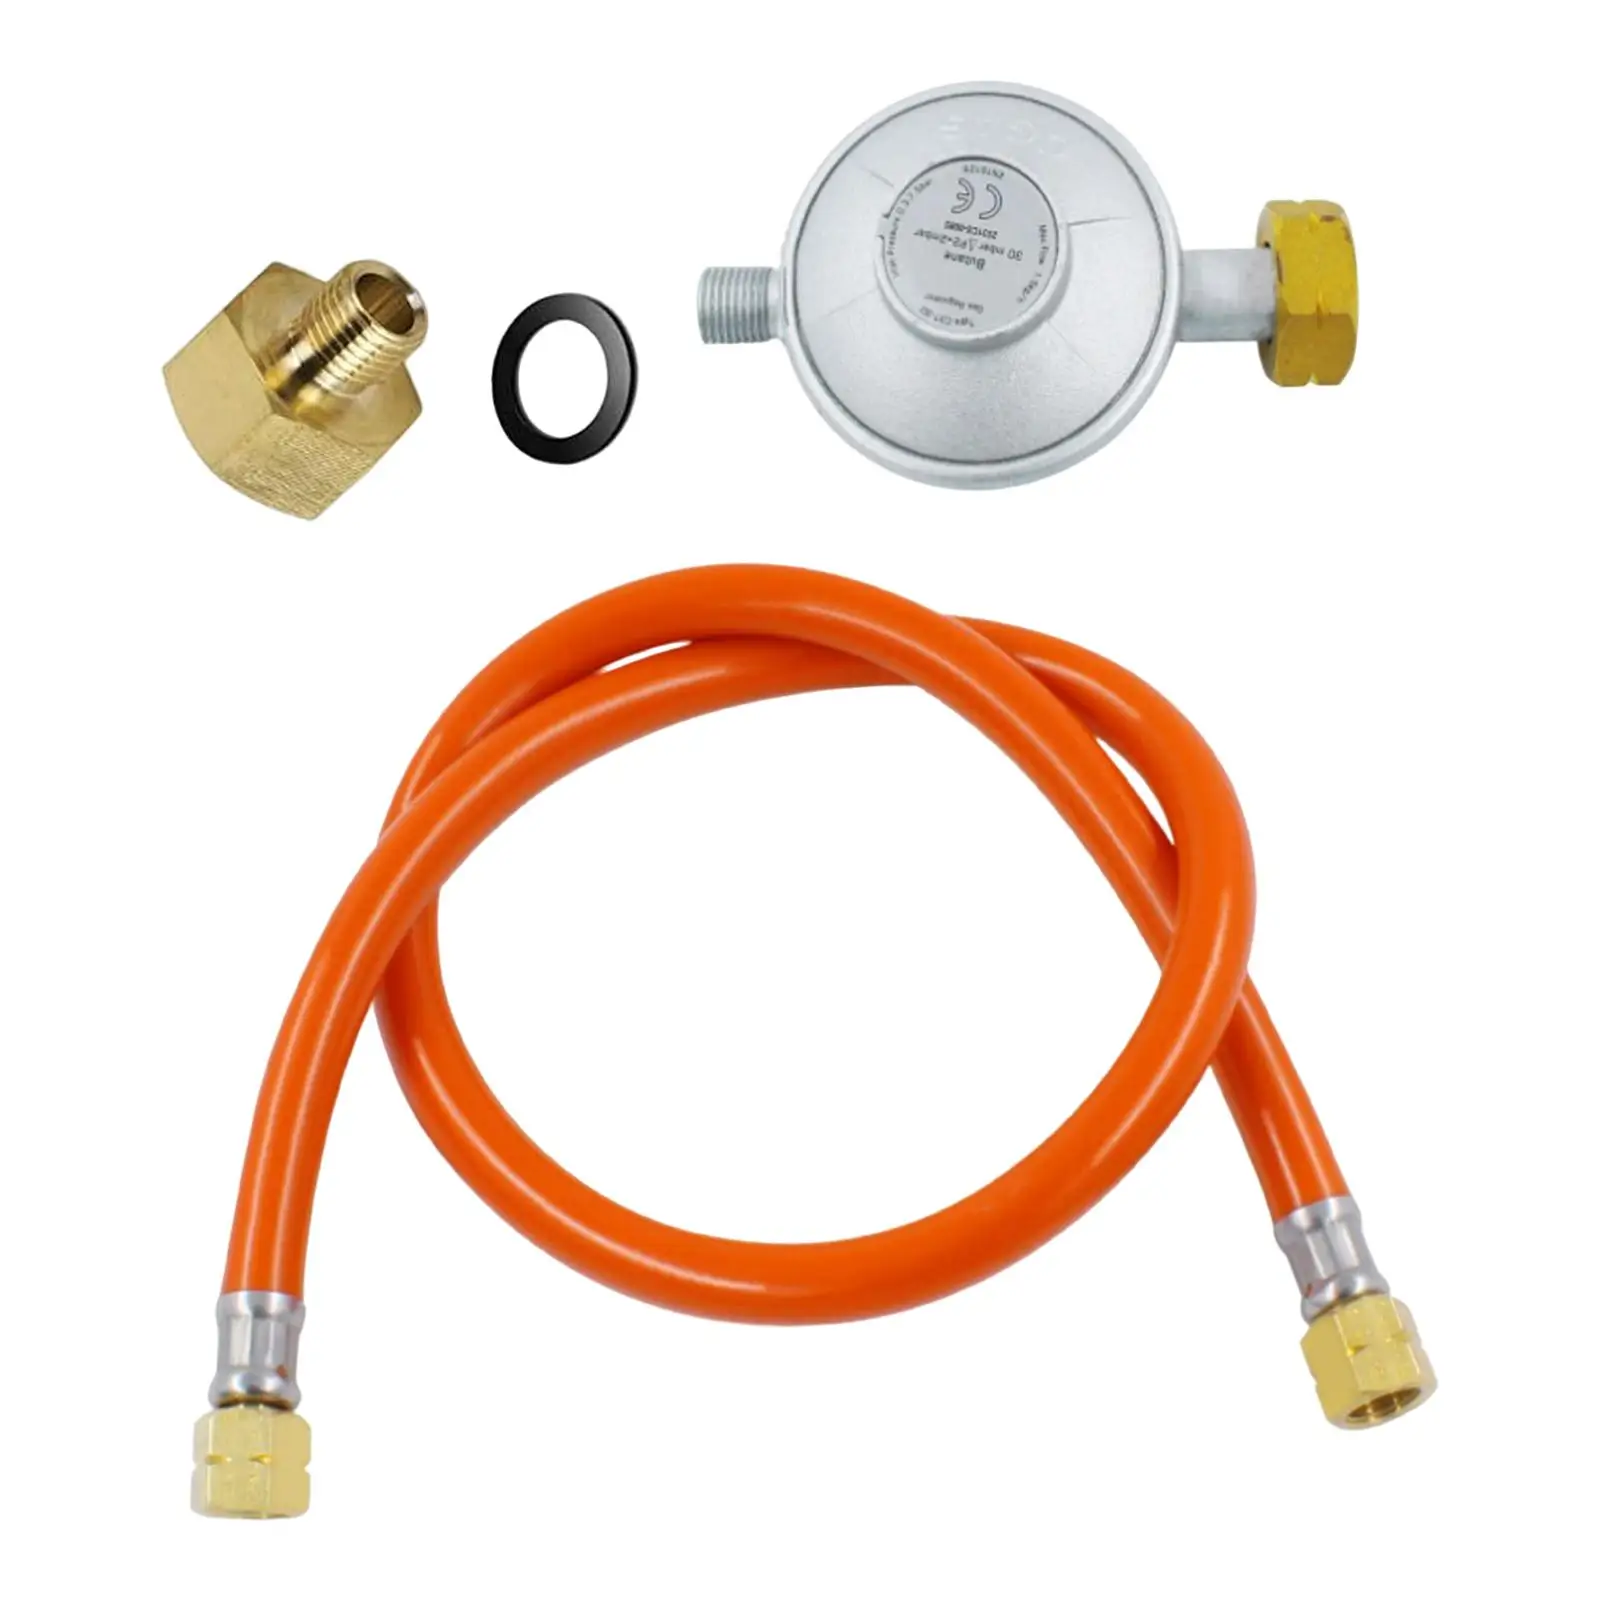 Low Pressure Hose and Regulator Kit Accessories Connector 5ft Hose Metal Part 1/2